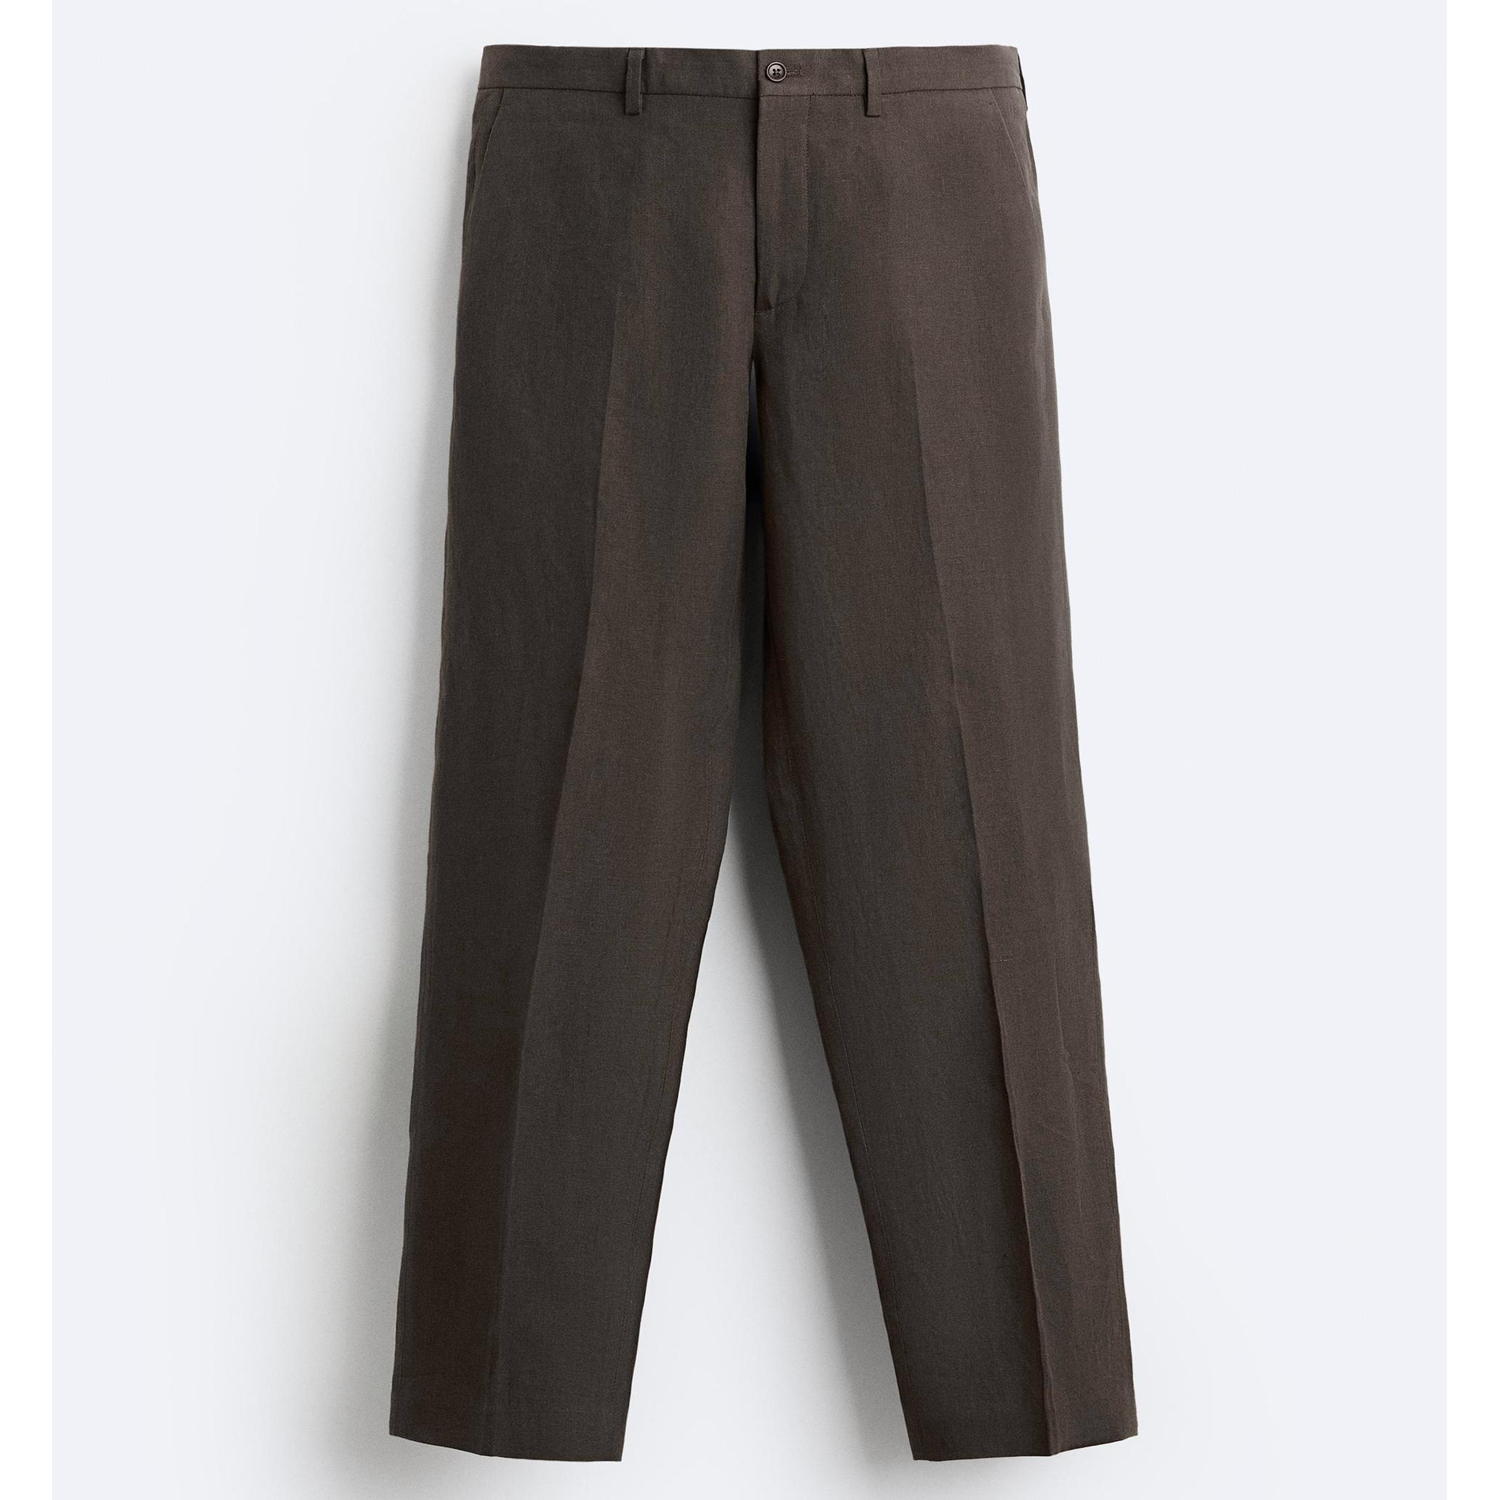 Брюки Zara 100% Linen Suit, коричневый брюки zara relaxed fit 100% linen белый